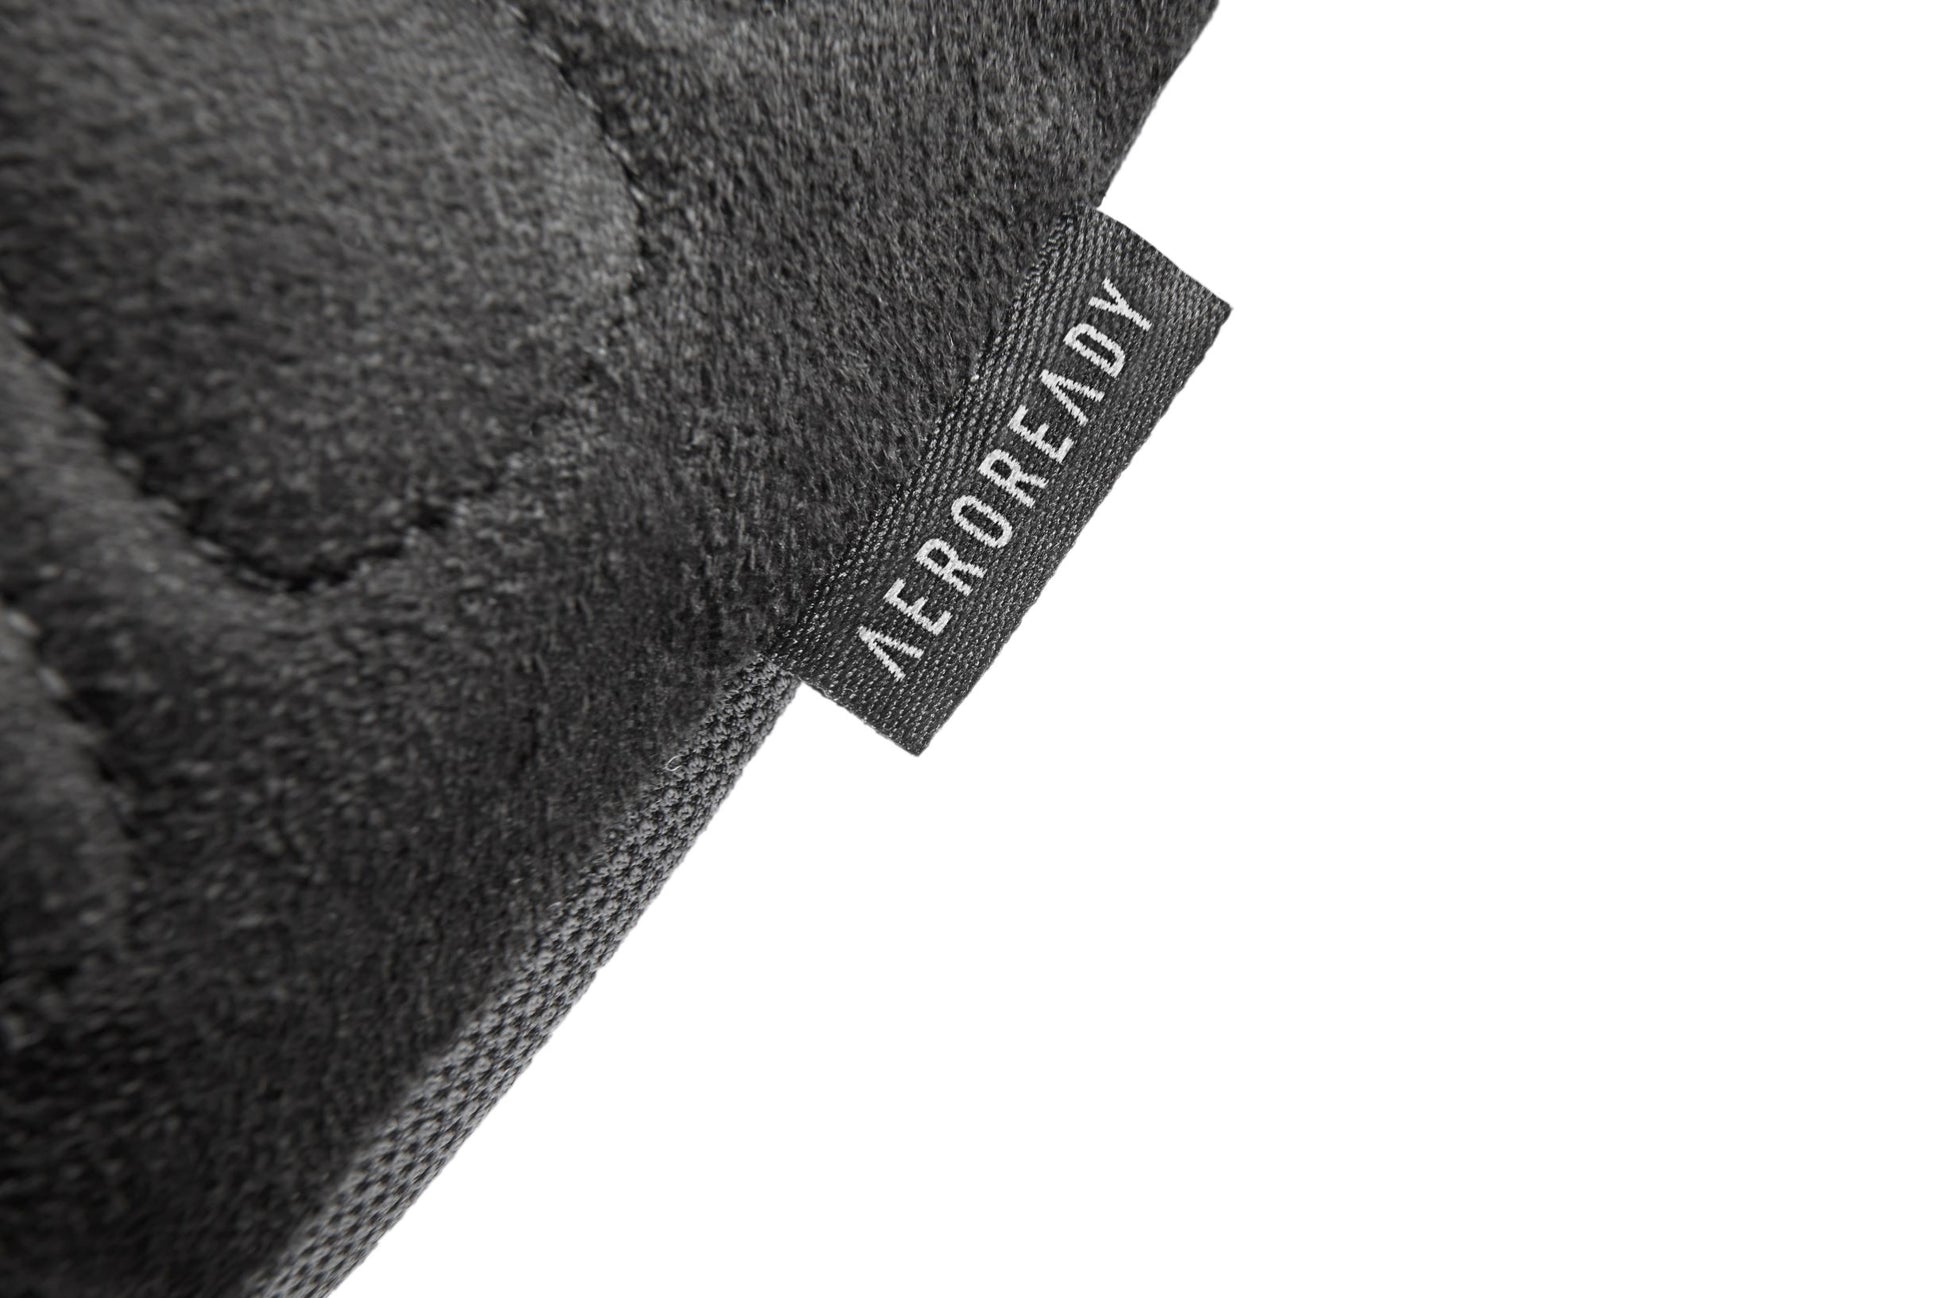 Adidas Essential Adjustable Gloves ADGB-12435BL - PretorianBrands